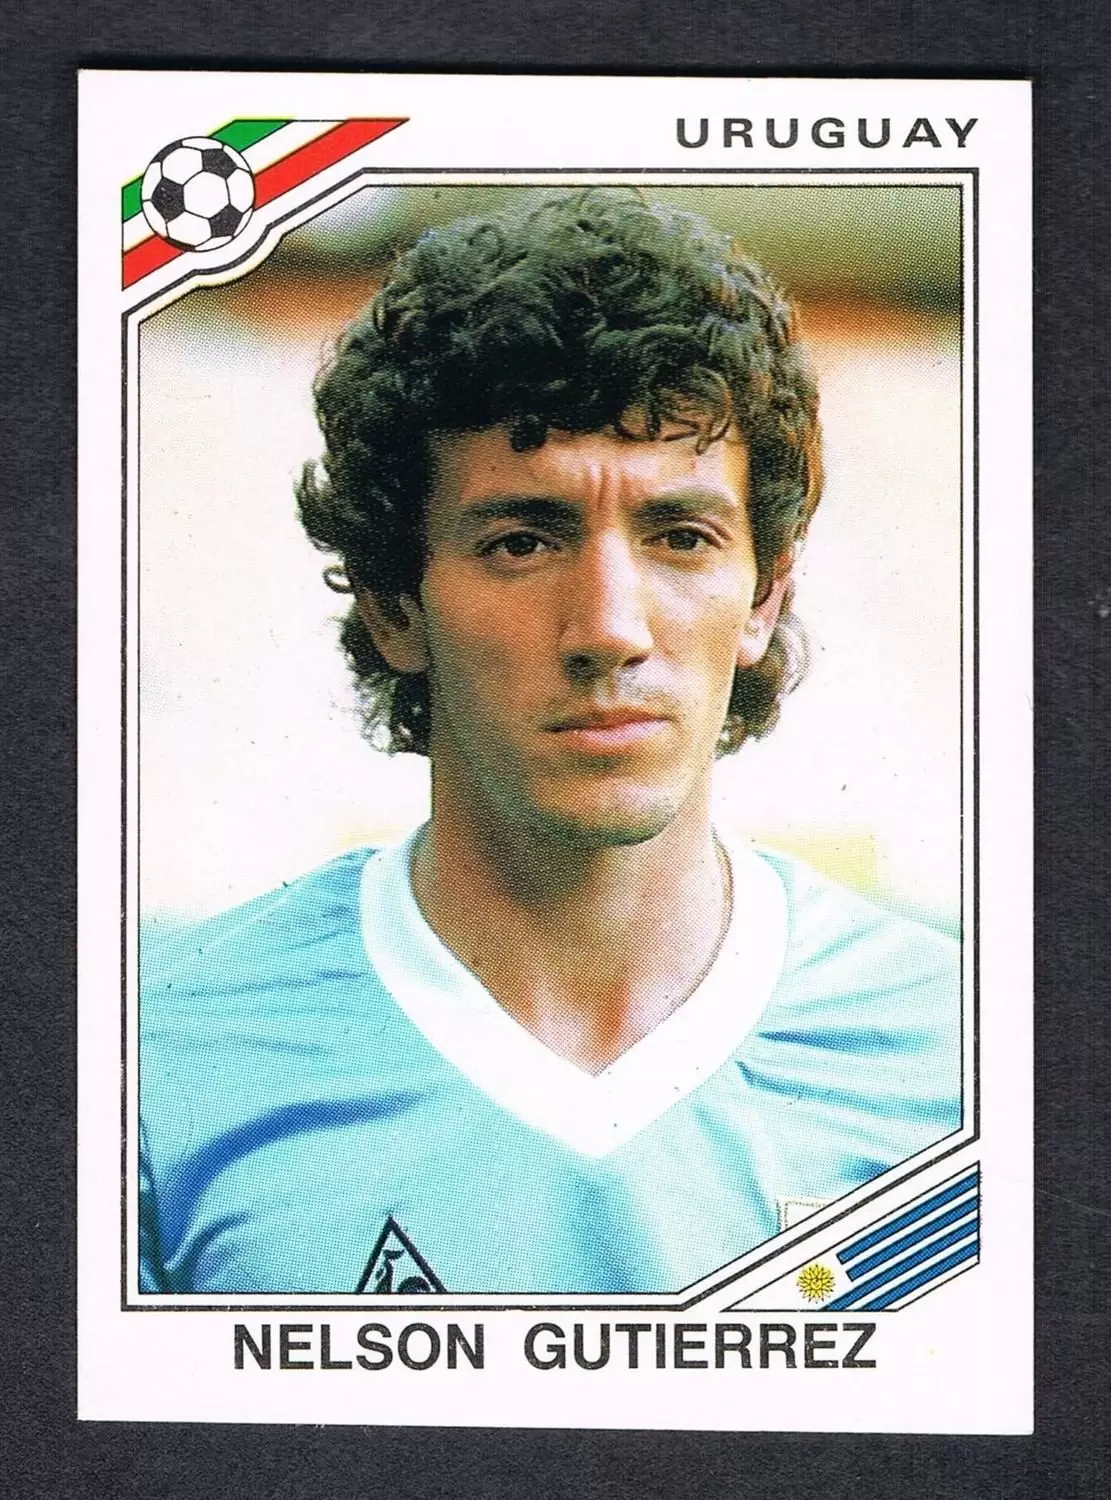 Mexico 86 World Cup - Nelson Gutierrez - Uruguay